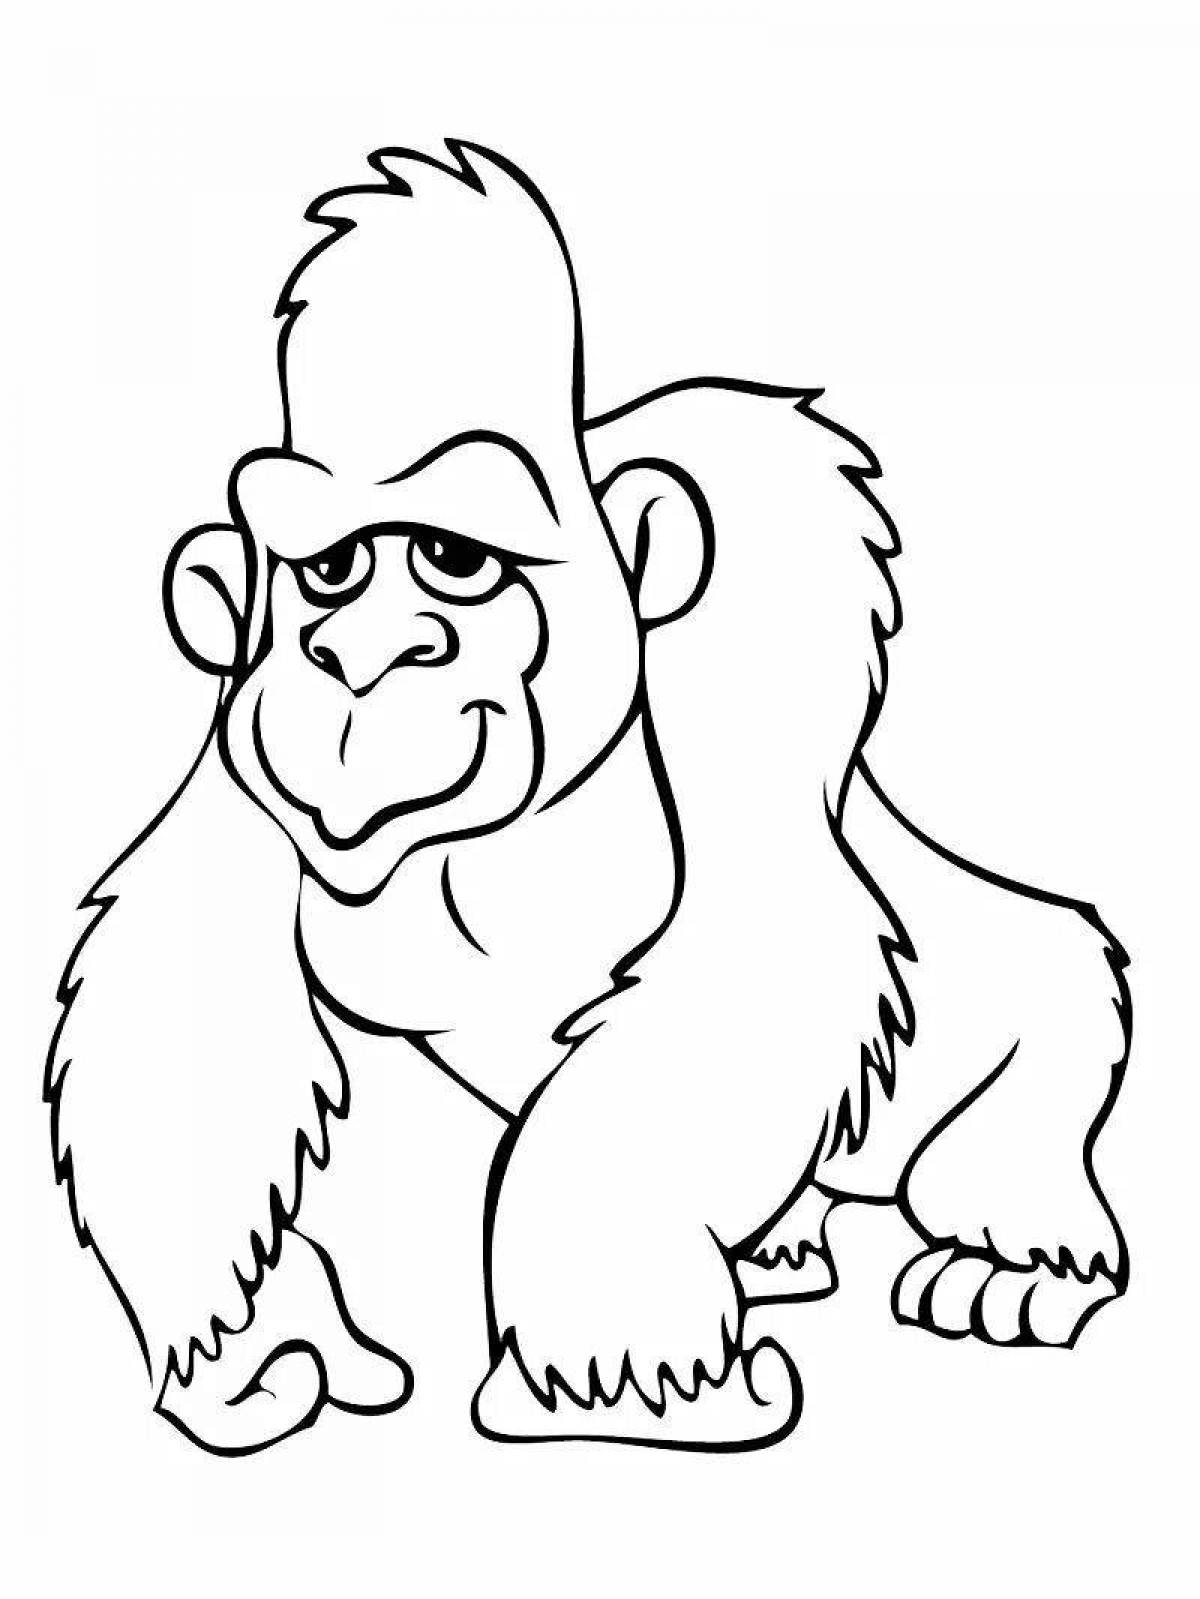 Joyful orangutan coloring book